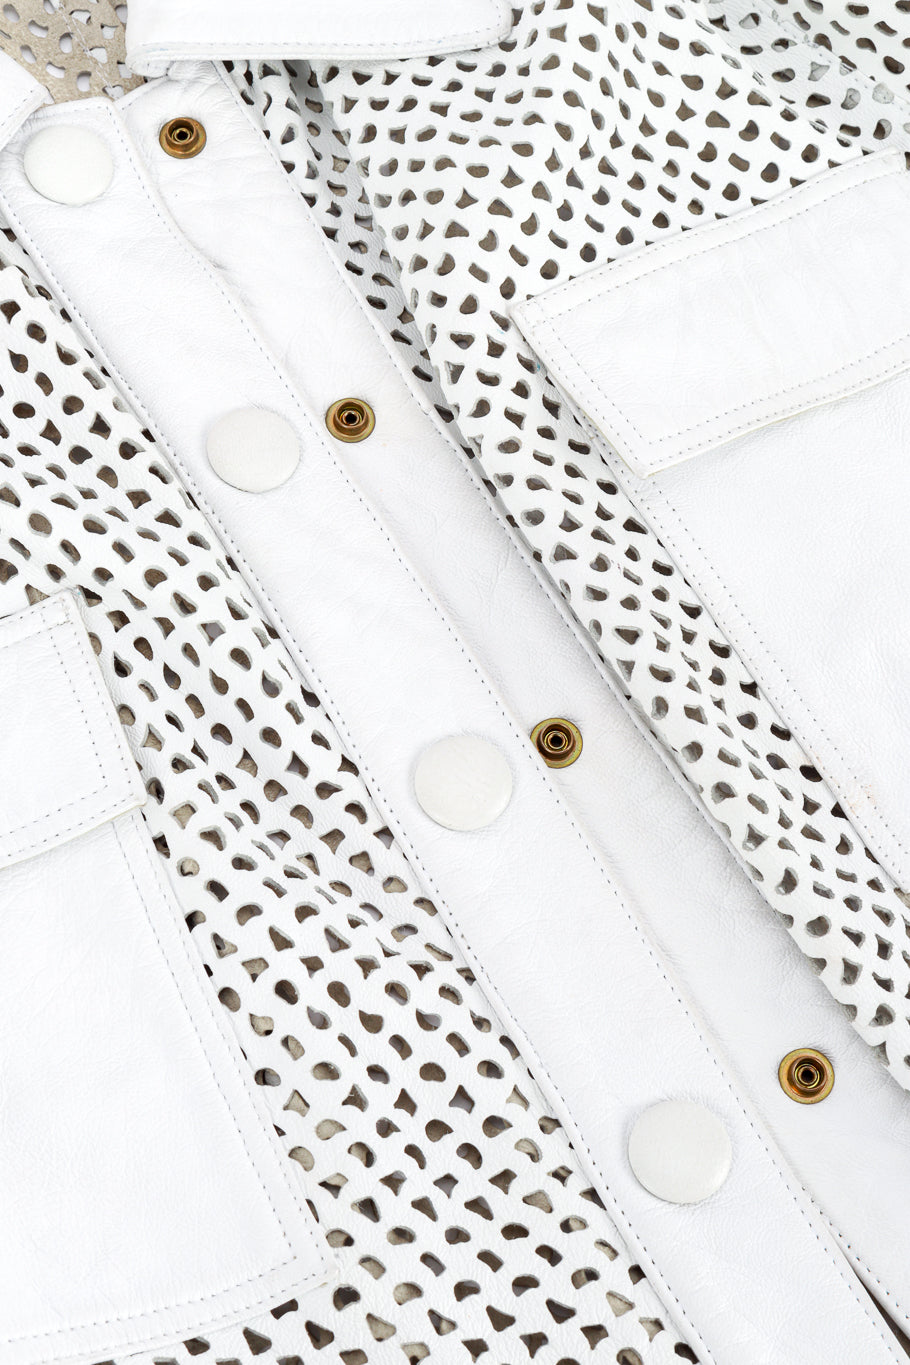 Vintage Julian K Perforated Leather Jacket front button closure closeup @recess la